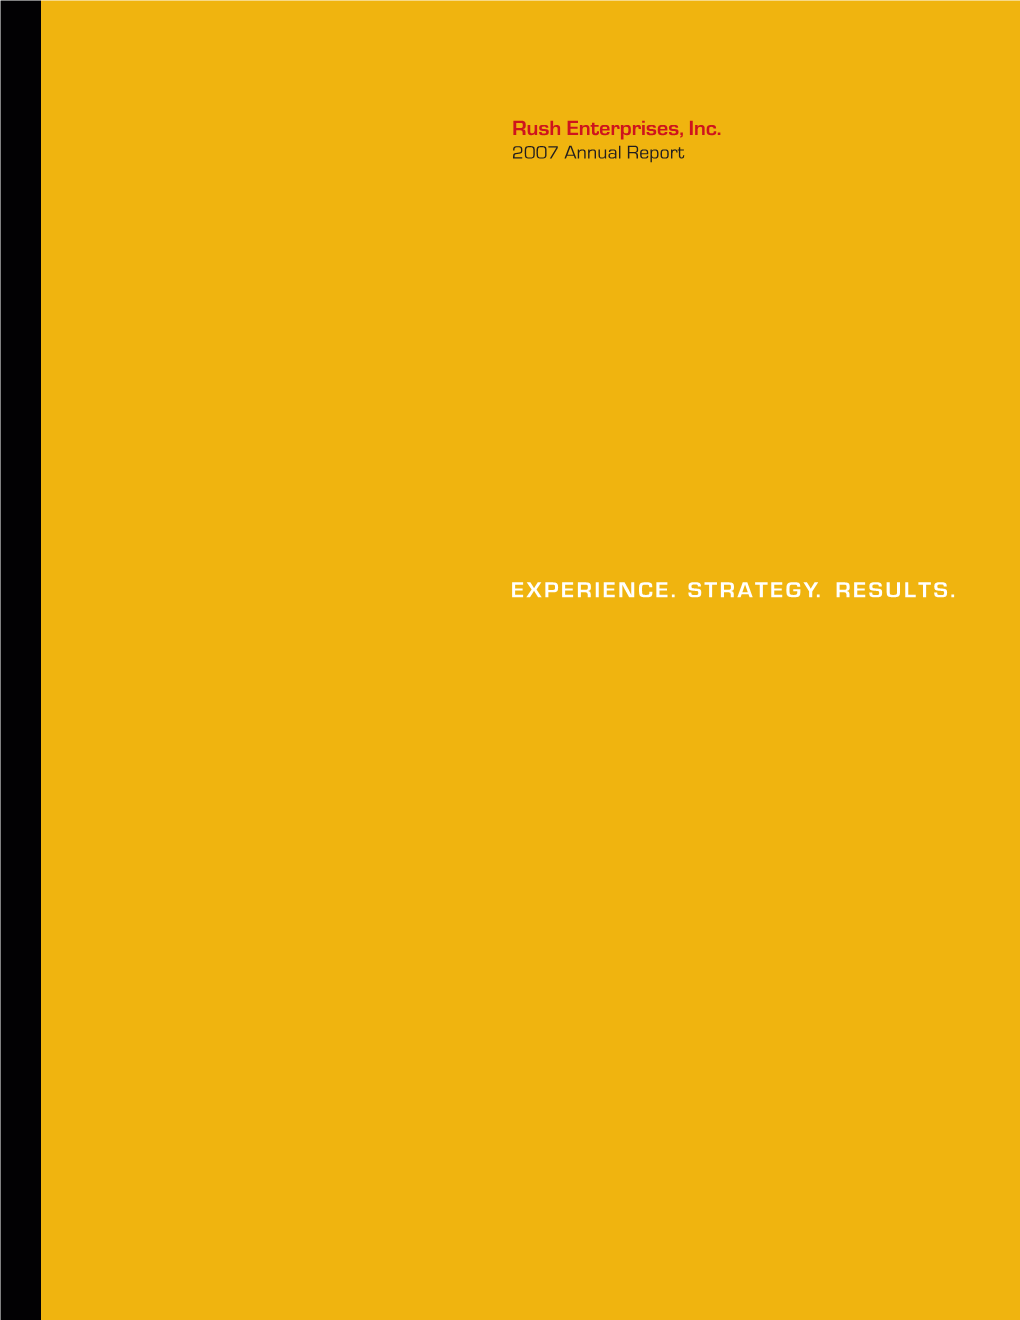 Rush Enterprises, Inc. 2007 Annual Report